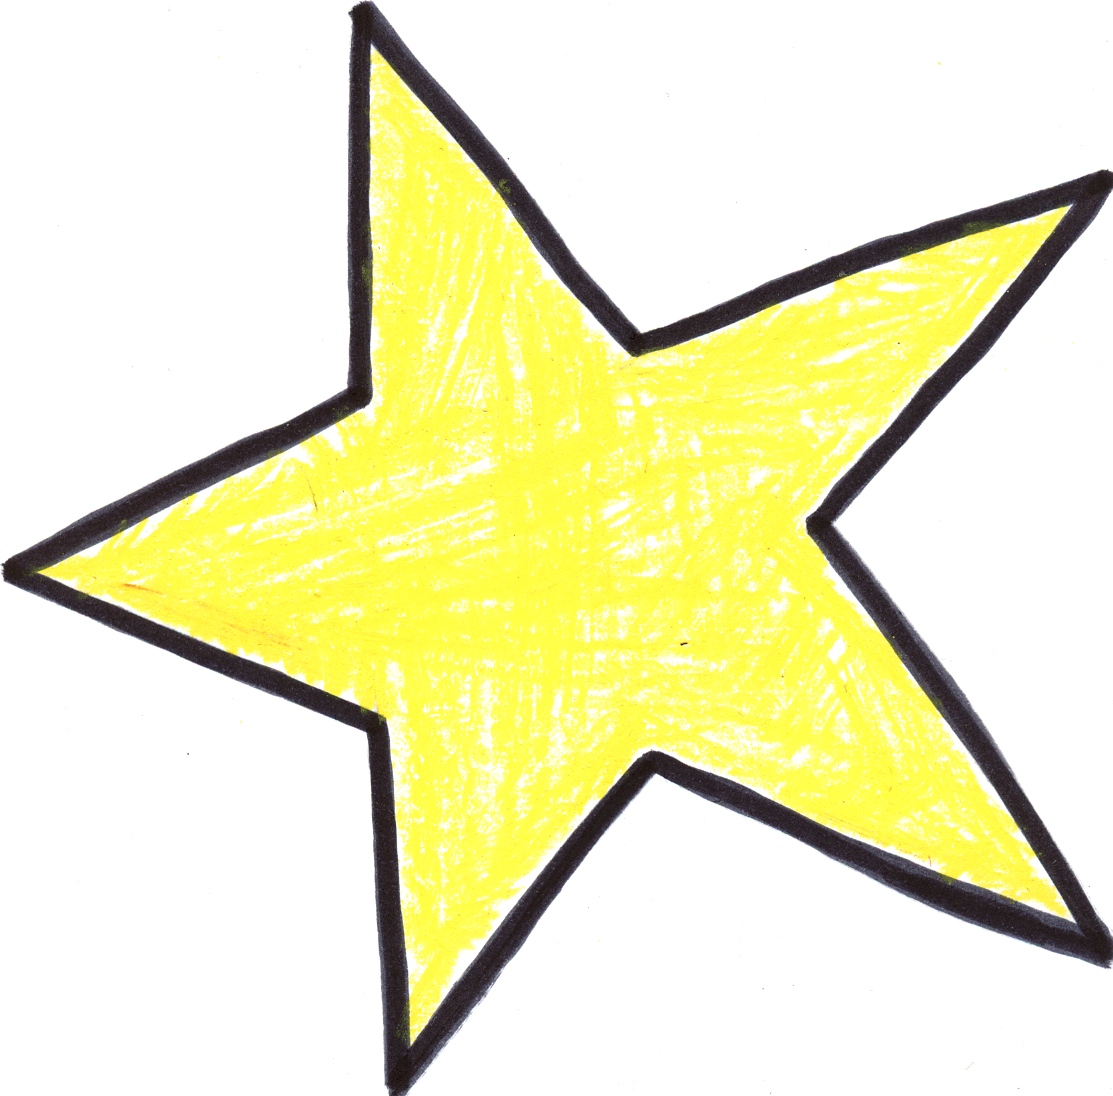 Картинки нарисованной звезды. Звезда. Звезда рисунок. Желтая звезда. Звездочки для рисования.